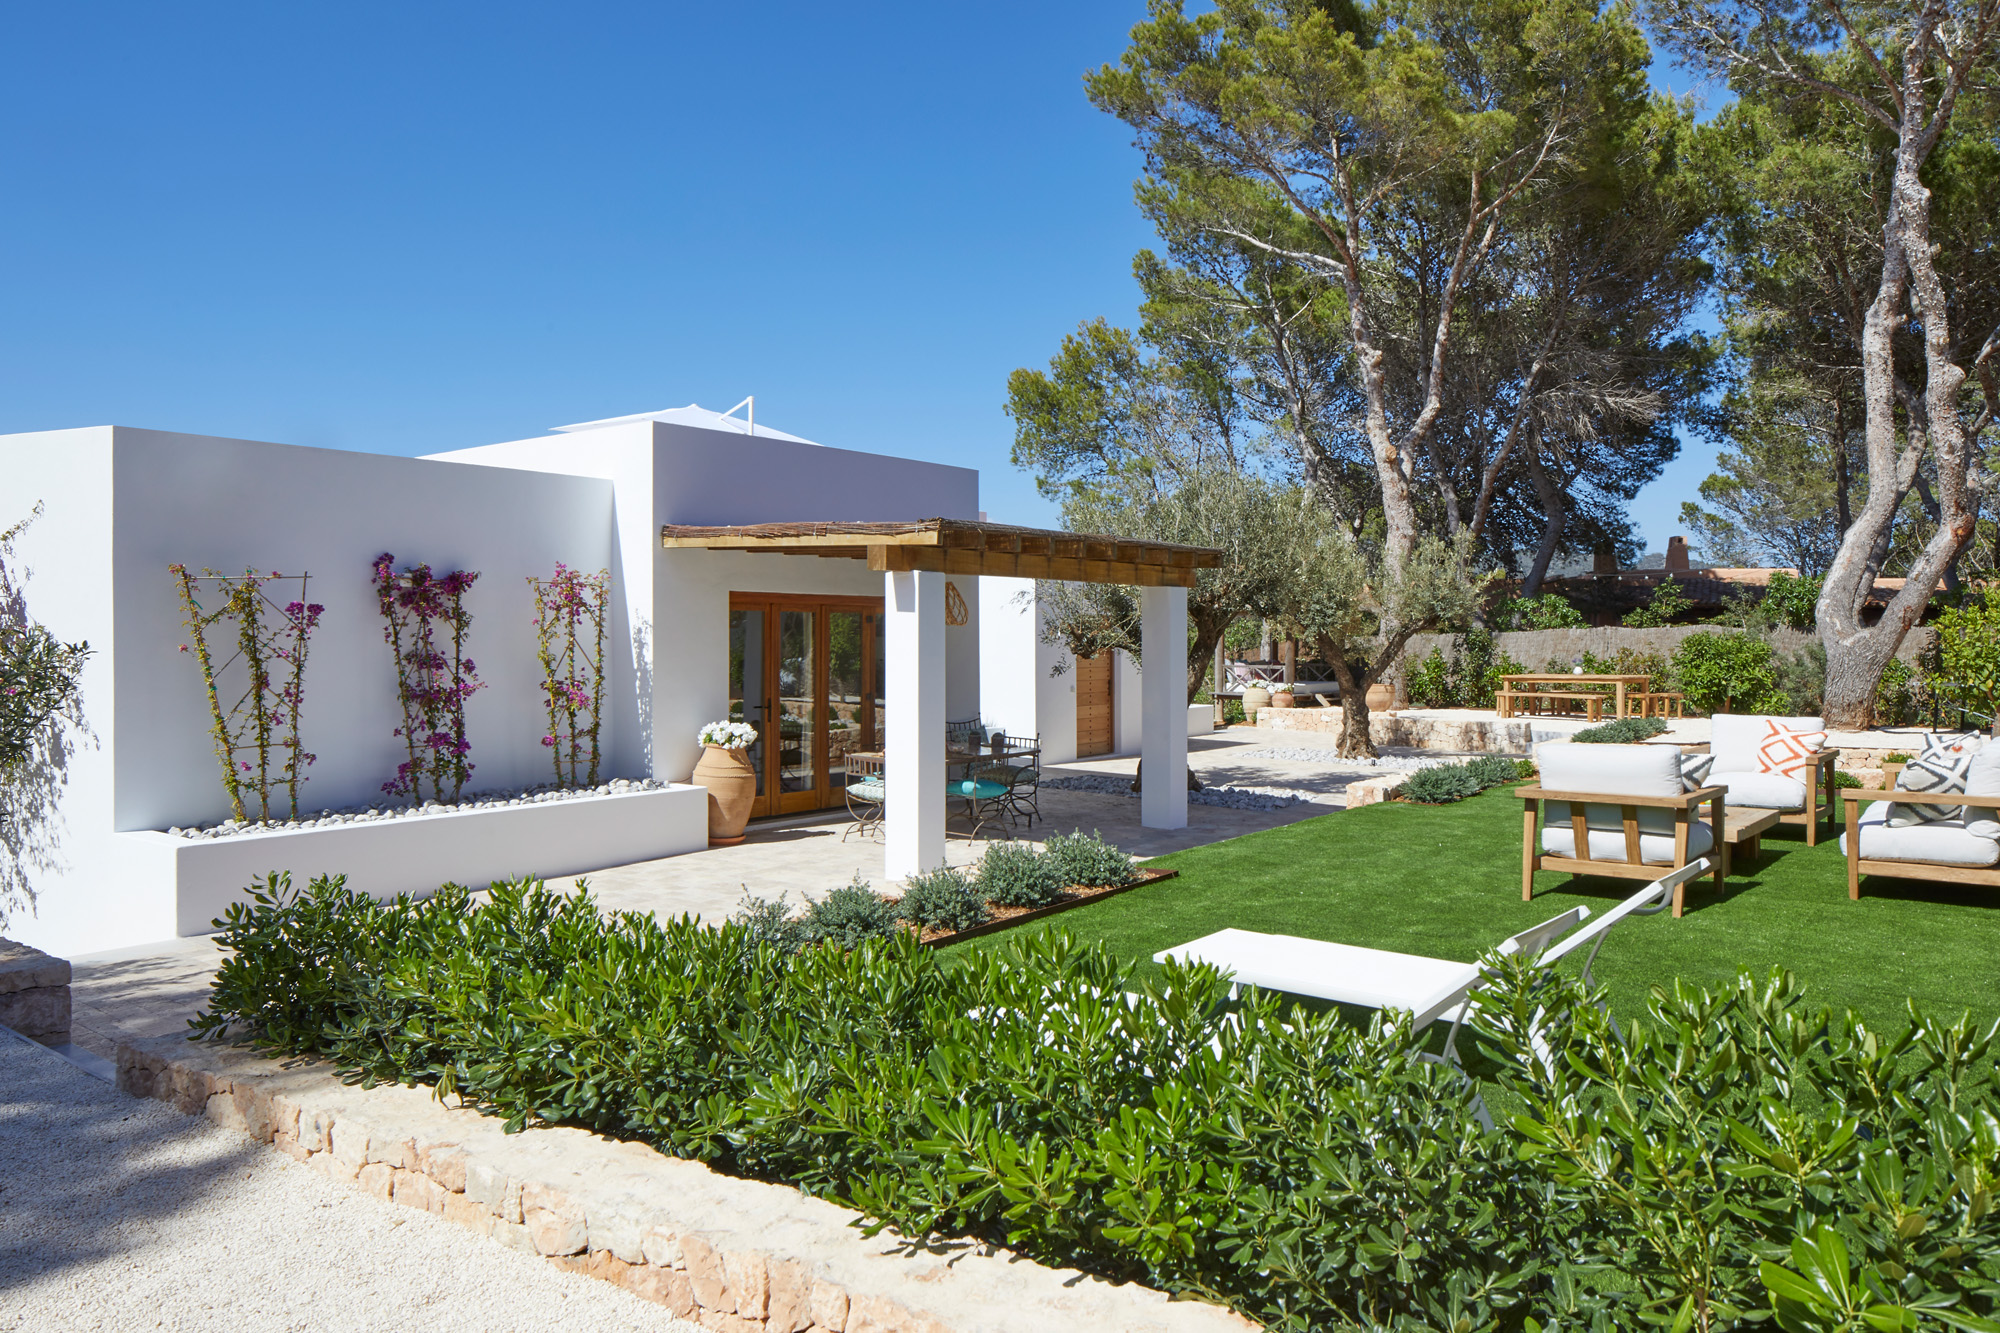 Exterior and landscaped gardens of a private villa in Ibiza